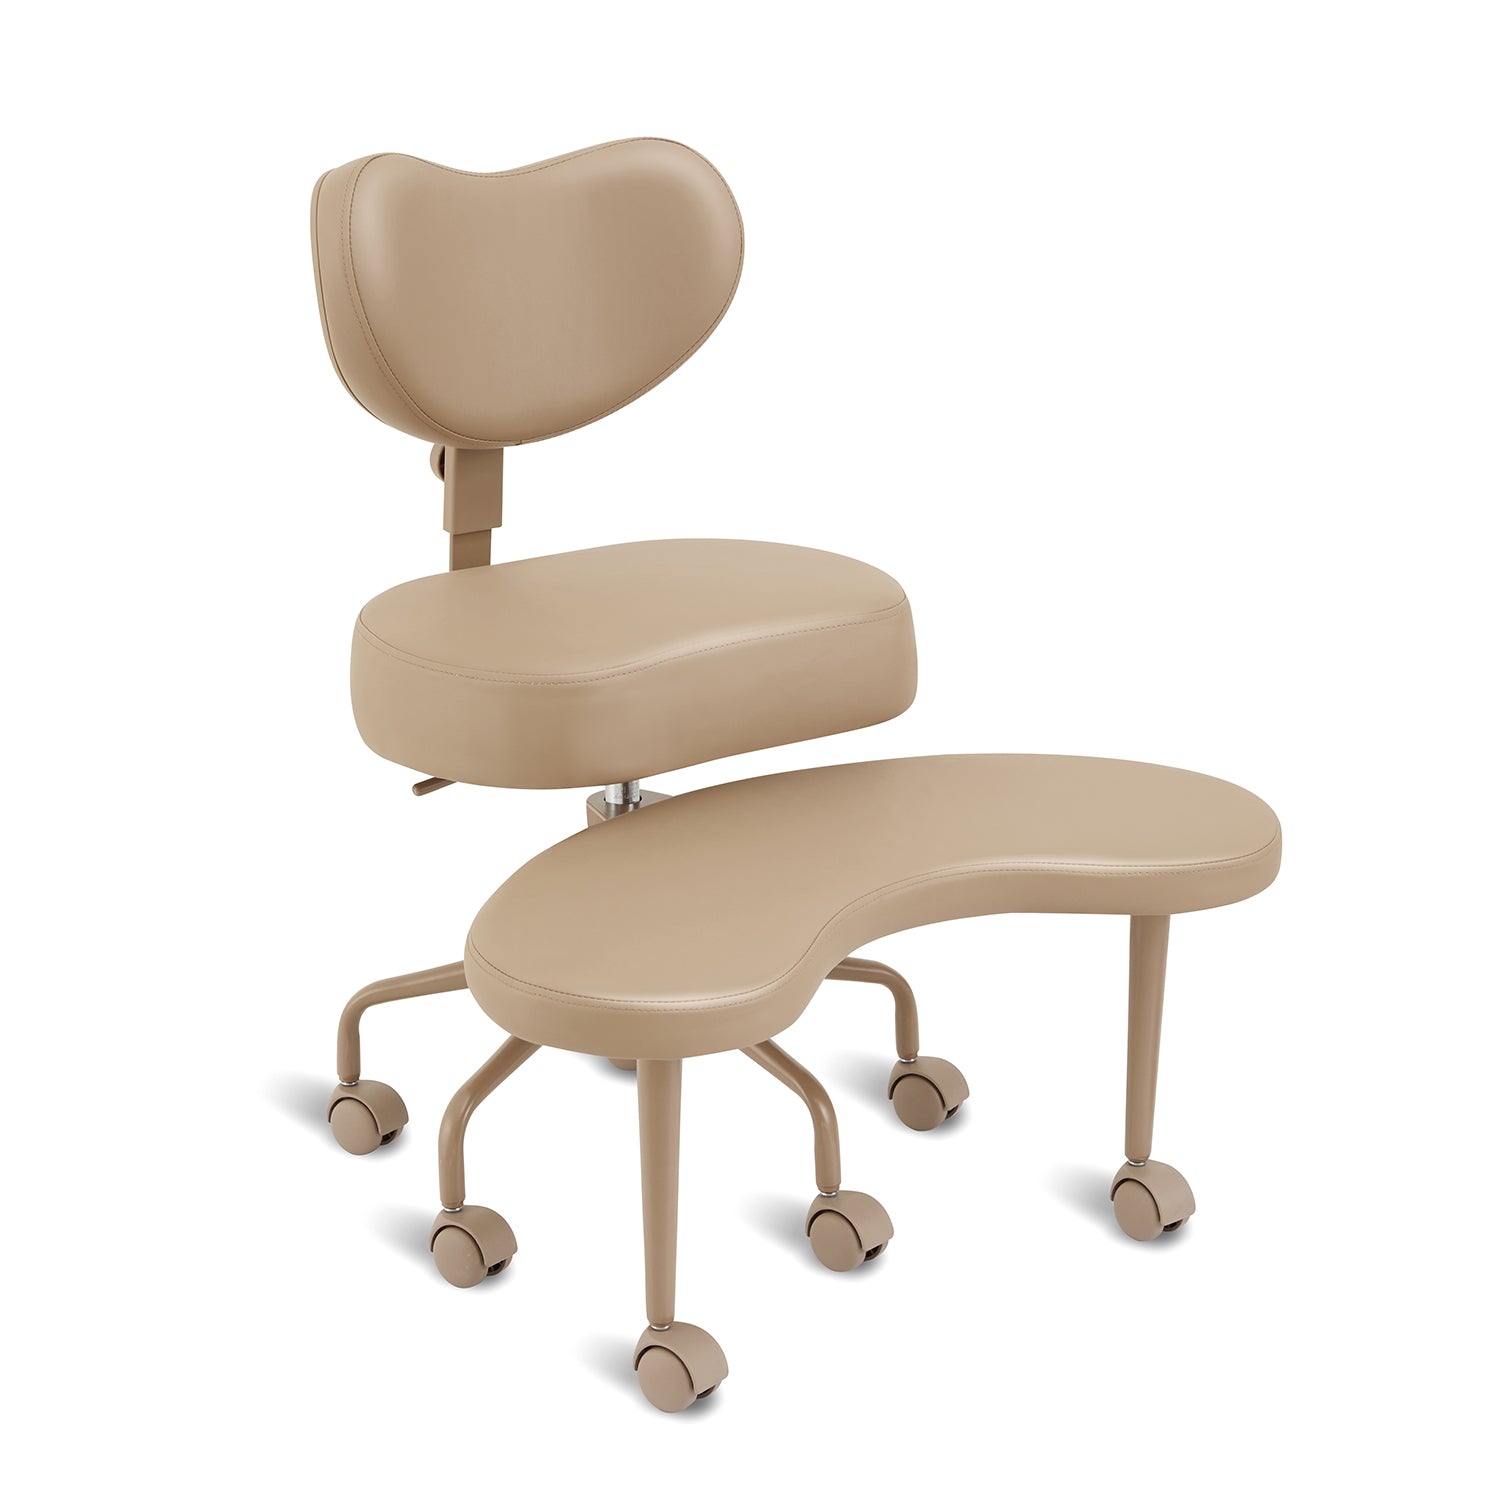 cross legged ergonomic chair Meditation Chair at Oaktafair Chair Store